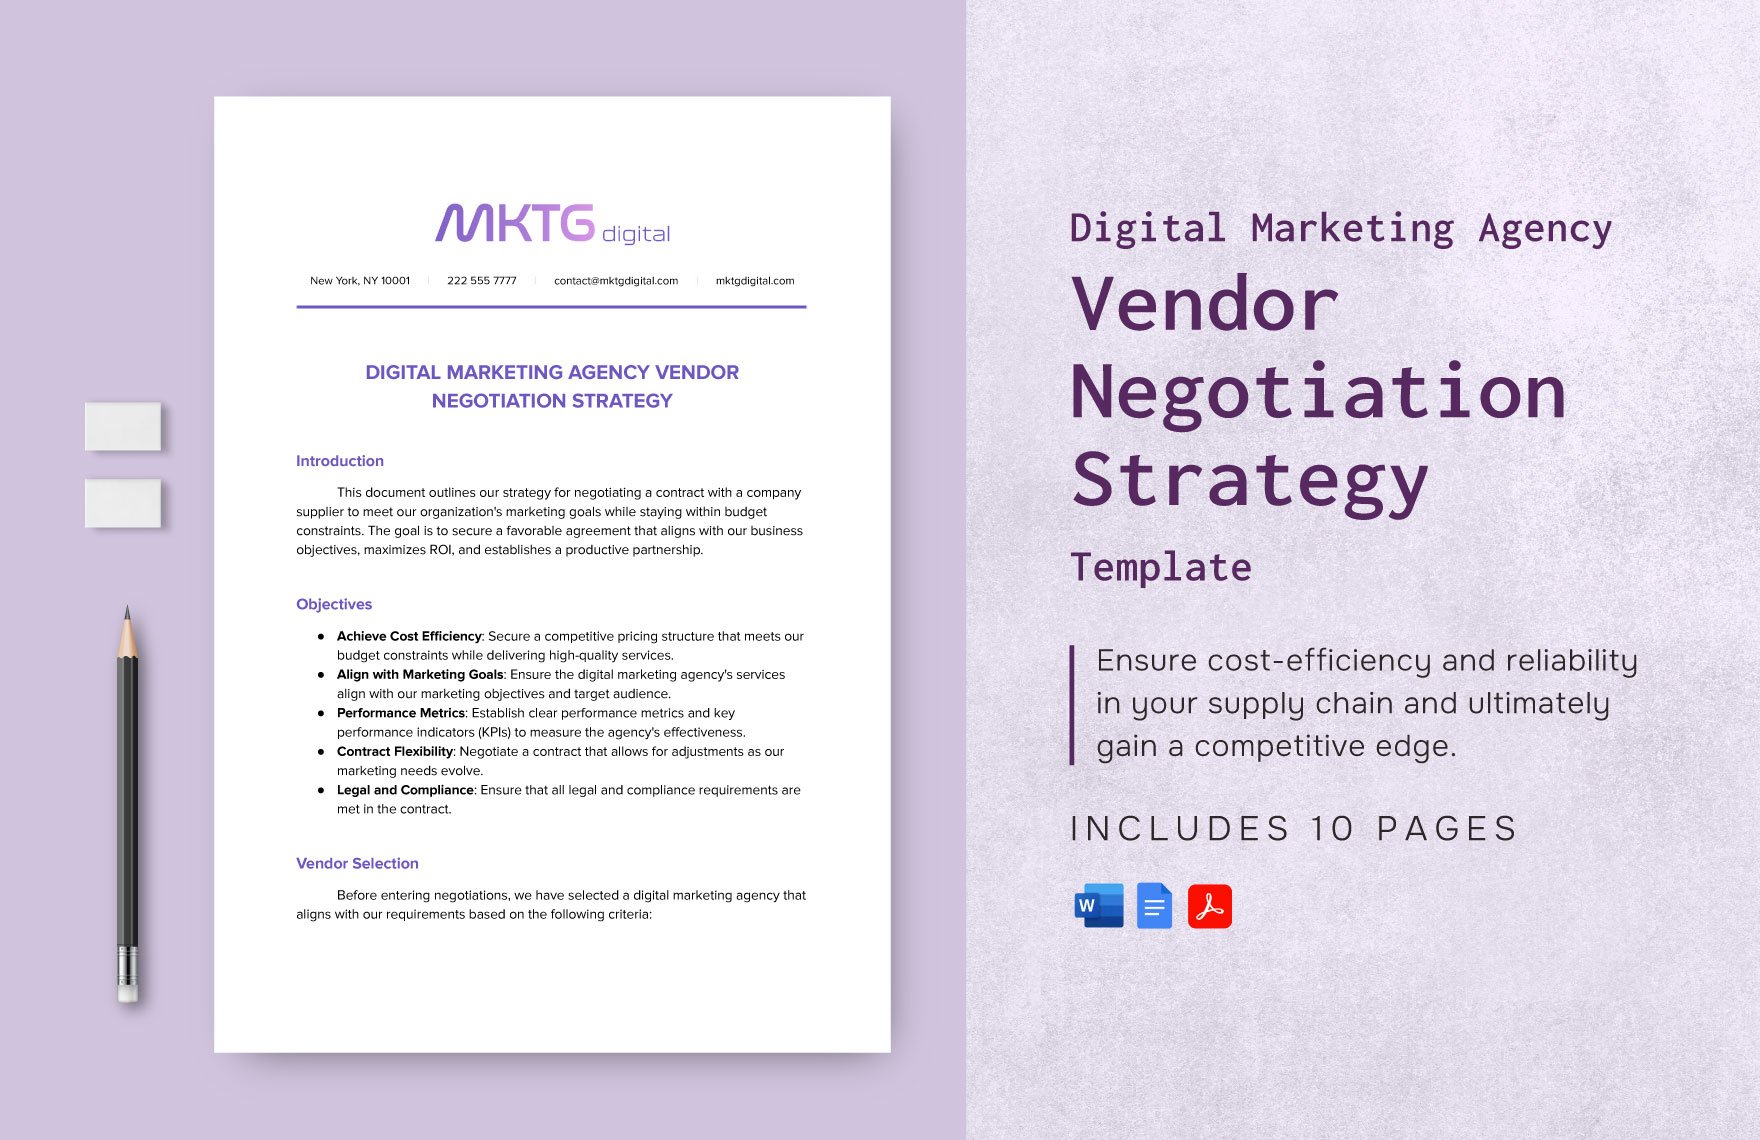 Digital Marketing Agency Vendor Negotiation Strategy Template